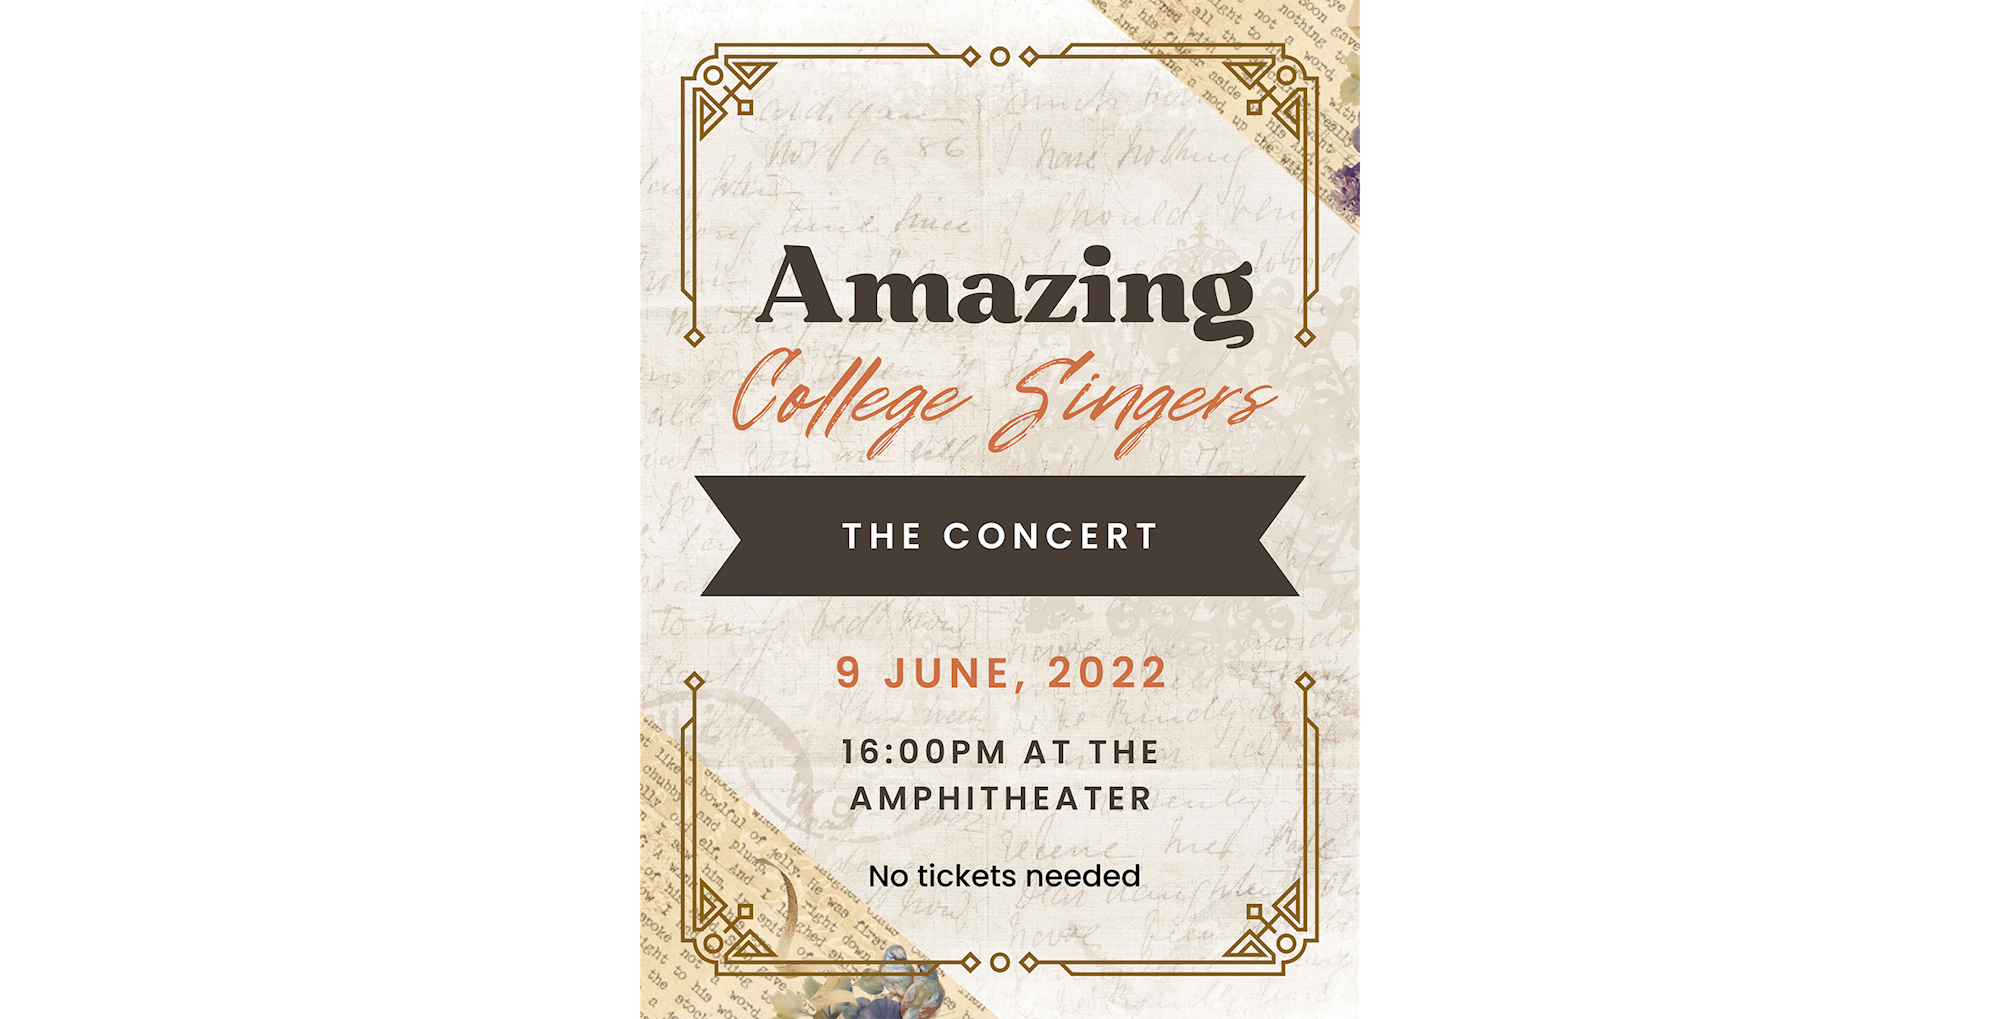 amazing-college-singers-concert-poster-2022